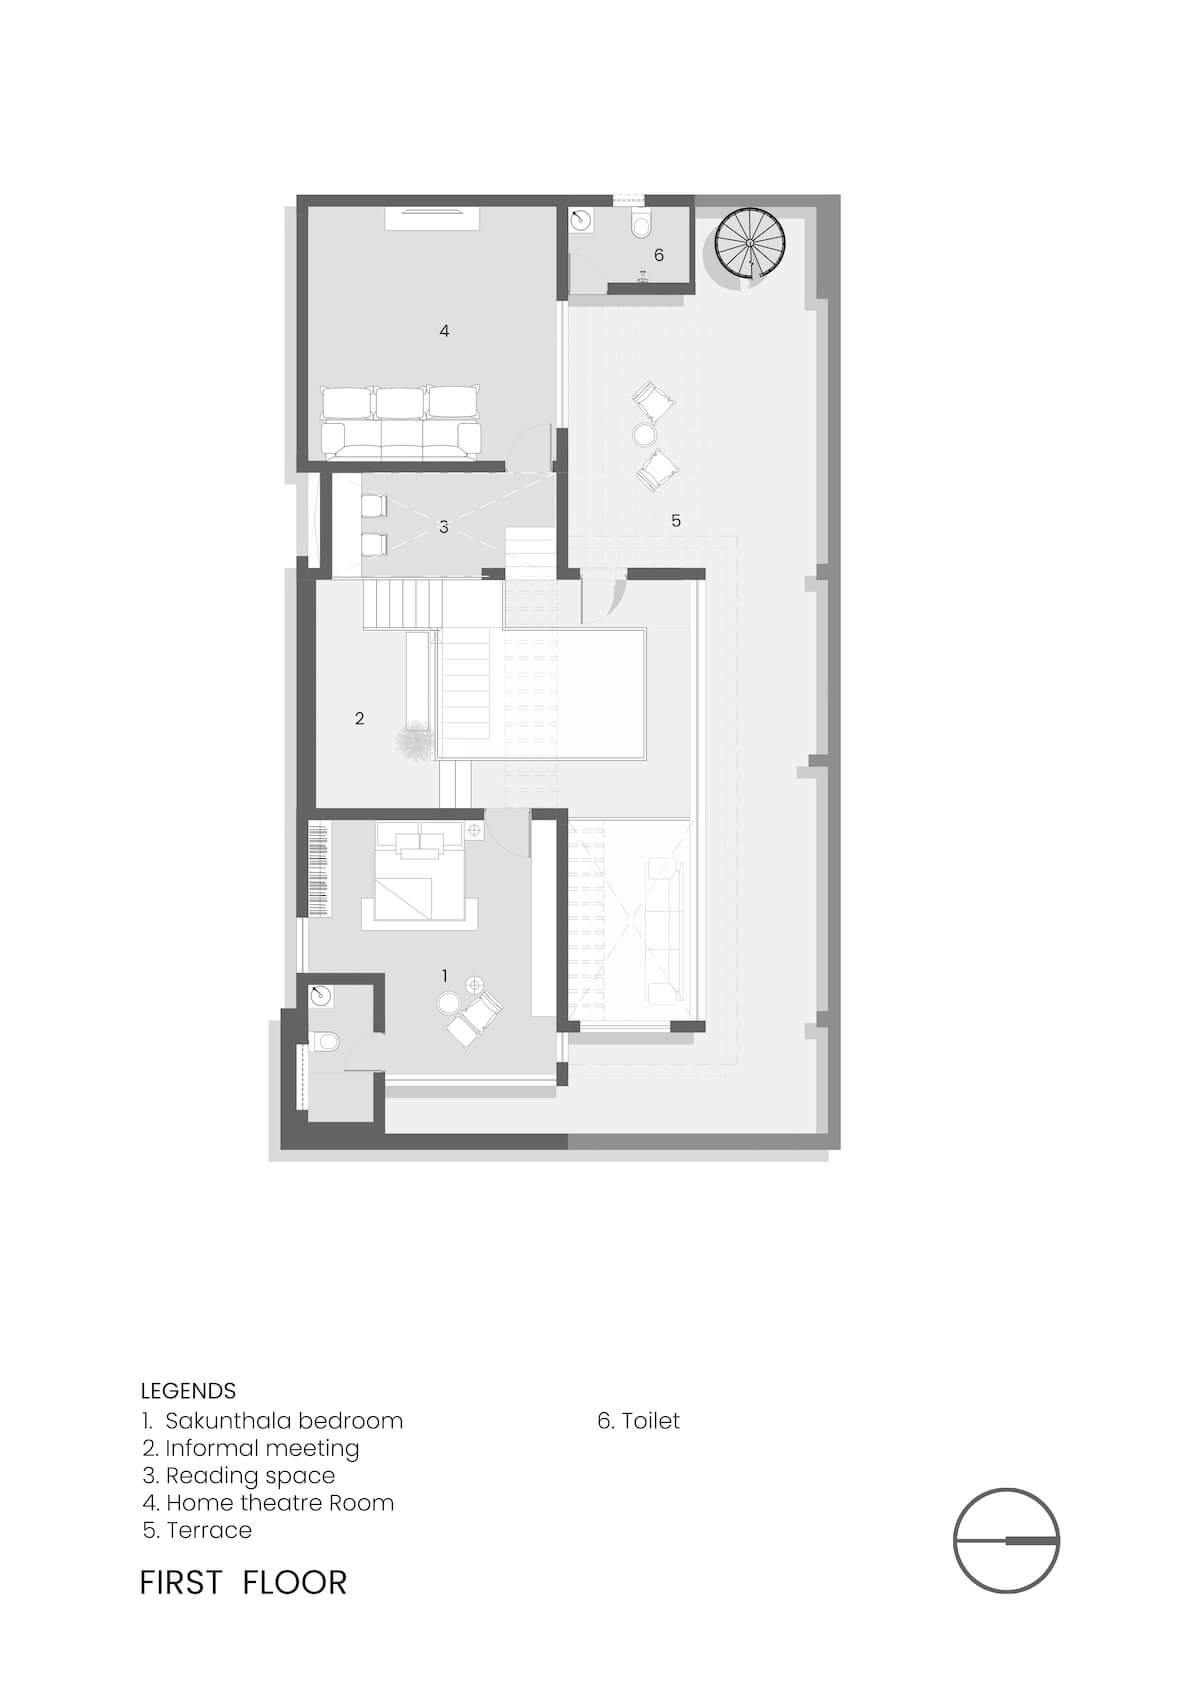 brick-veedu-madurai-onebulb-architecture-34